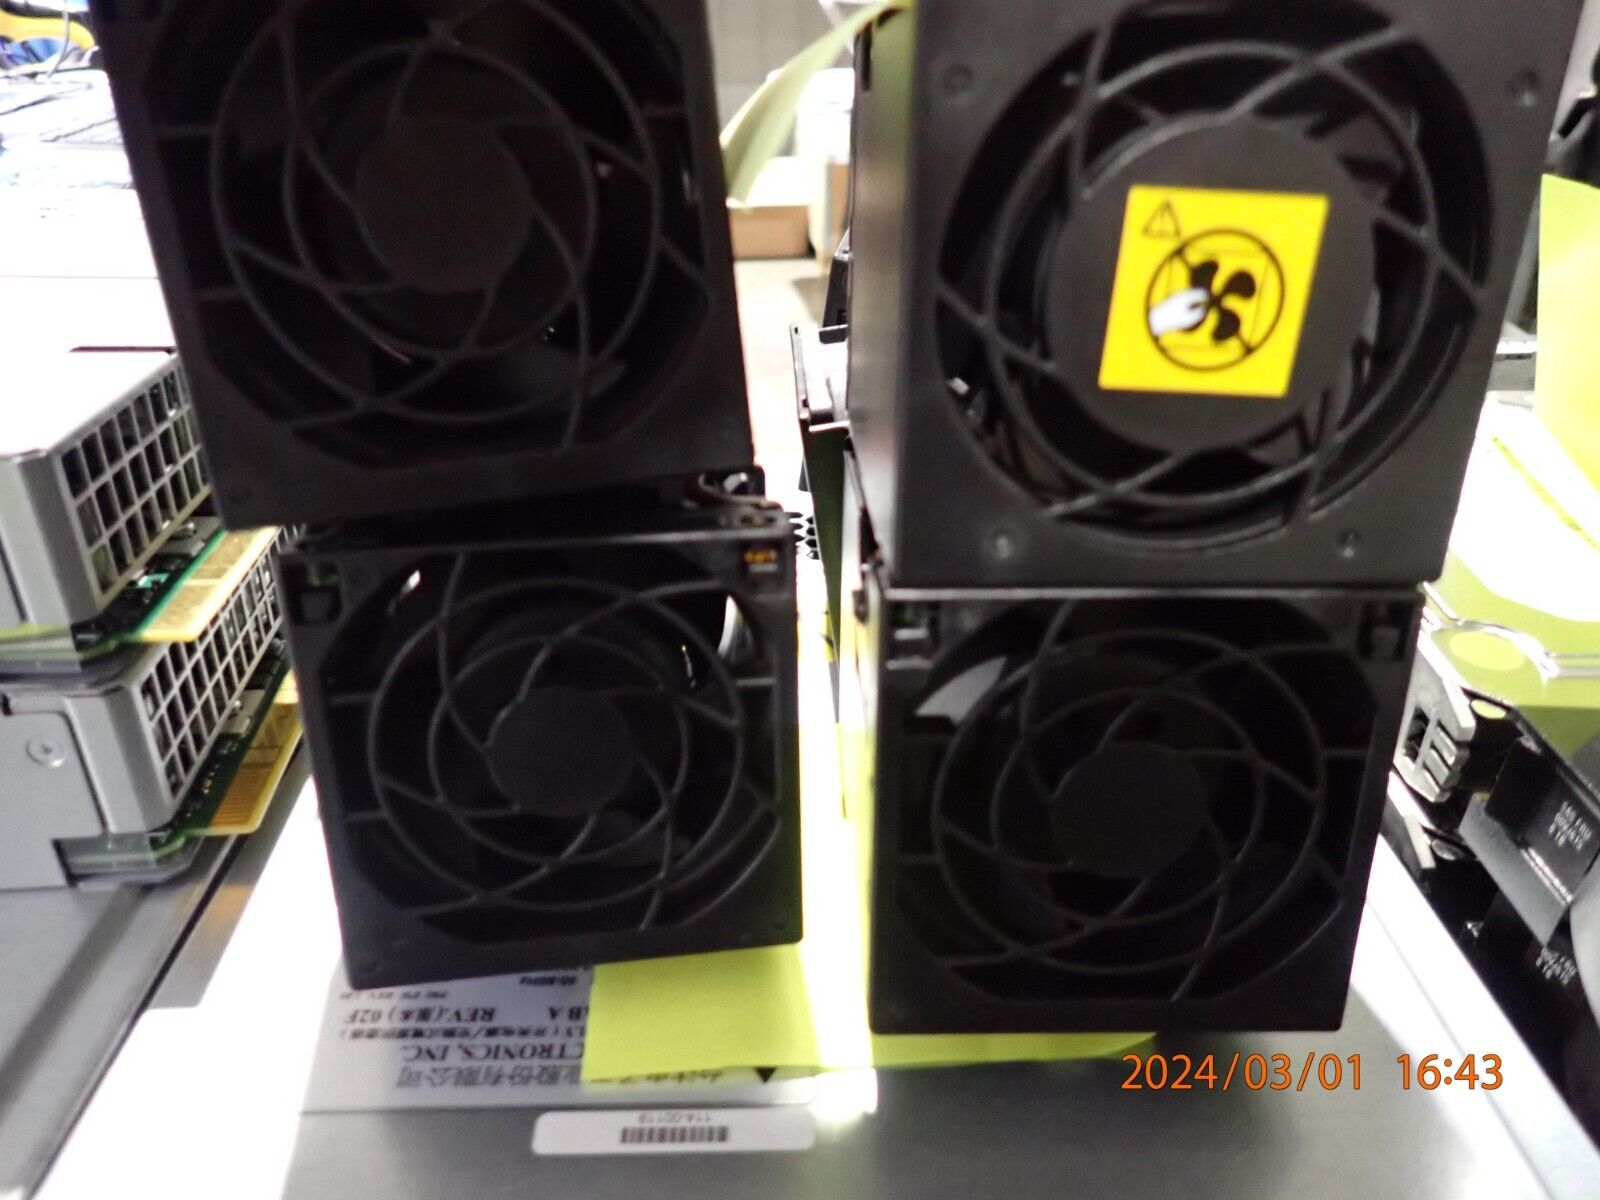 IBM Power8 Server S822/S824 60MM Cooling Fan Assembly PN: 00FV726